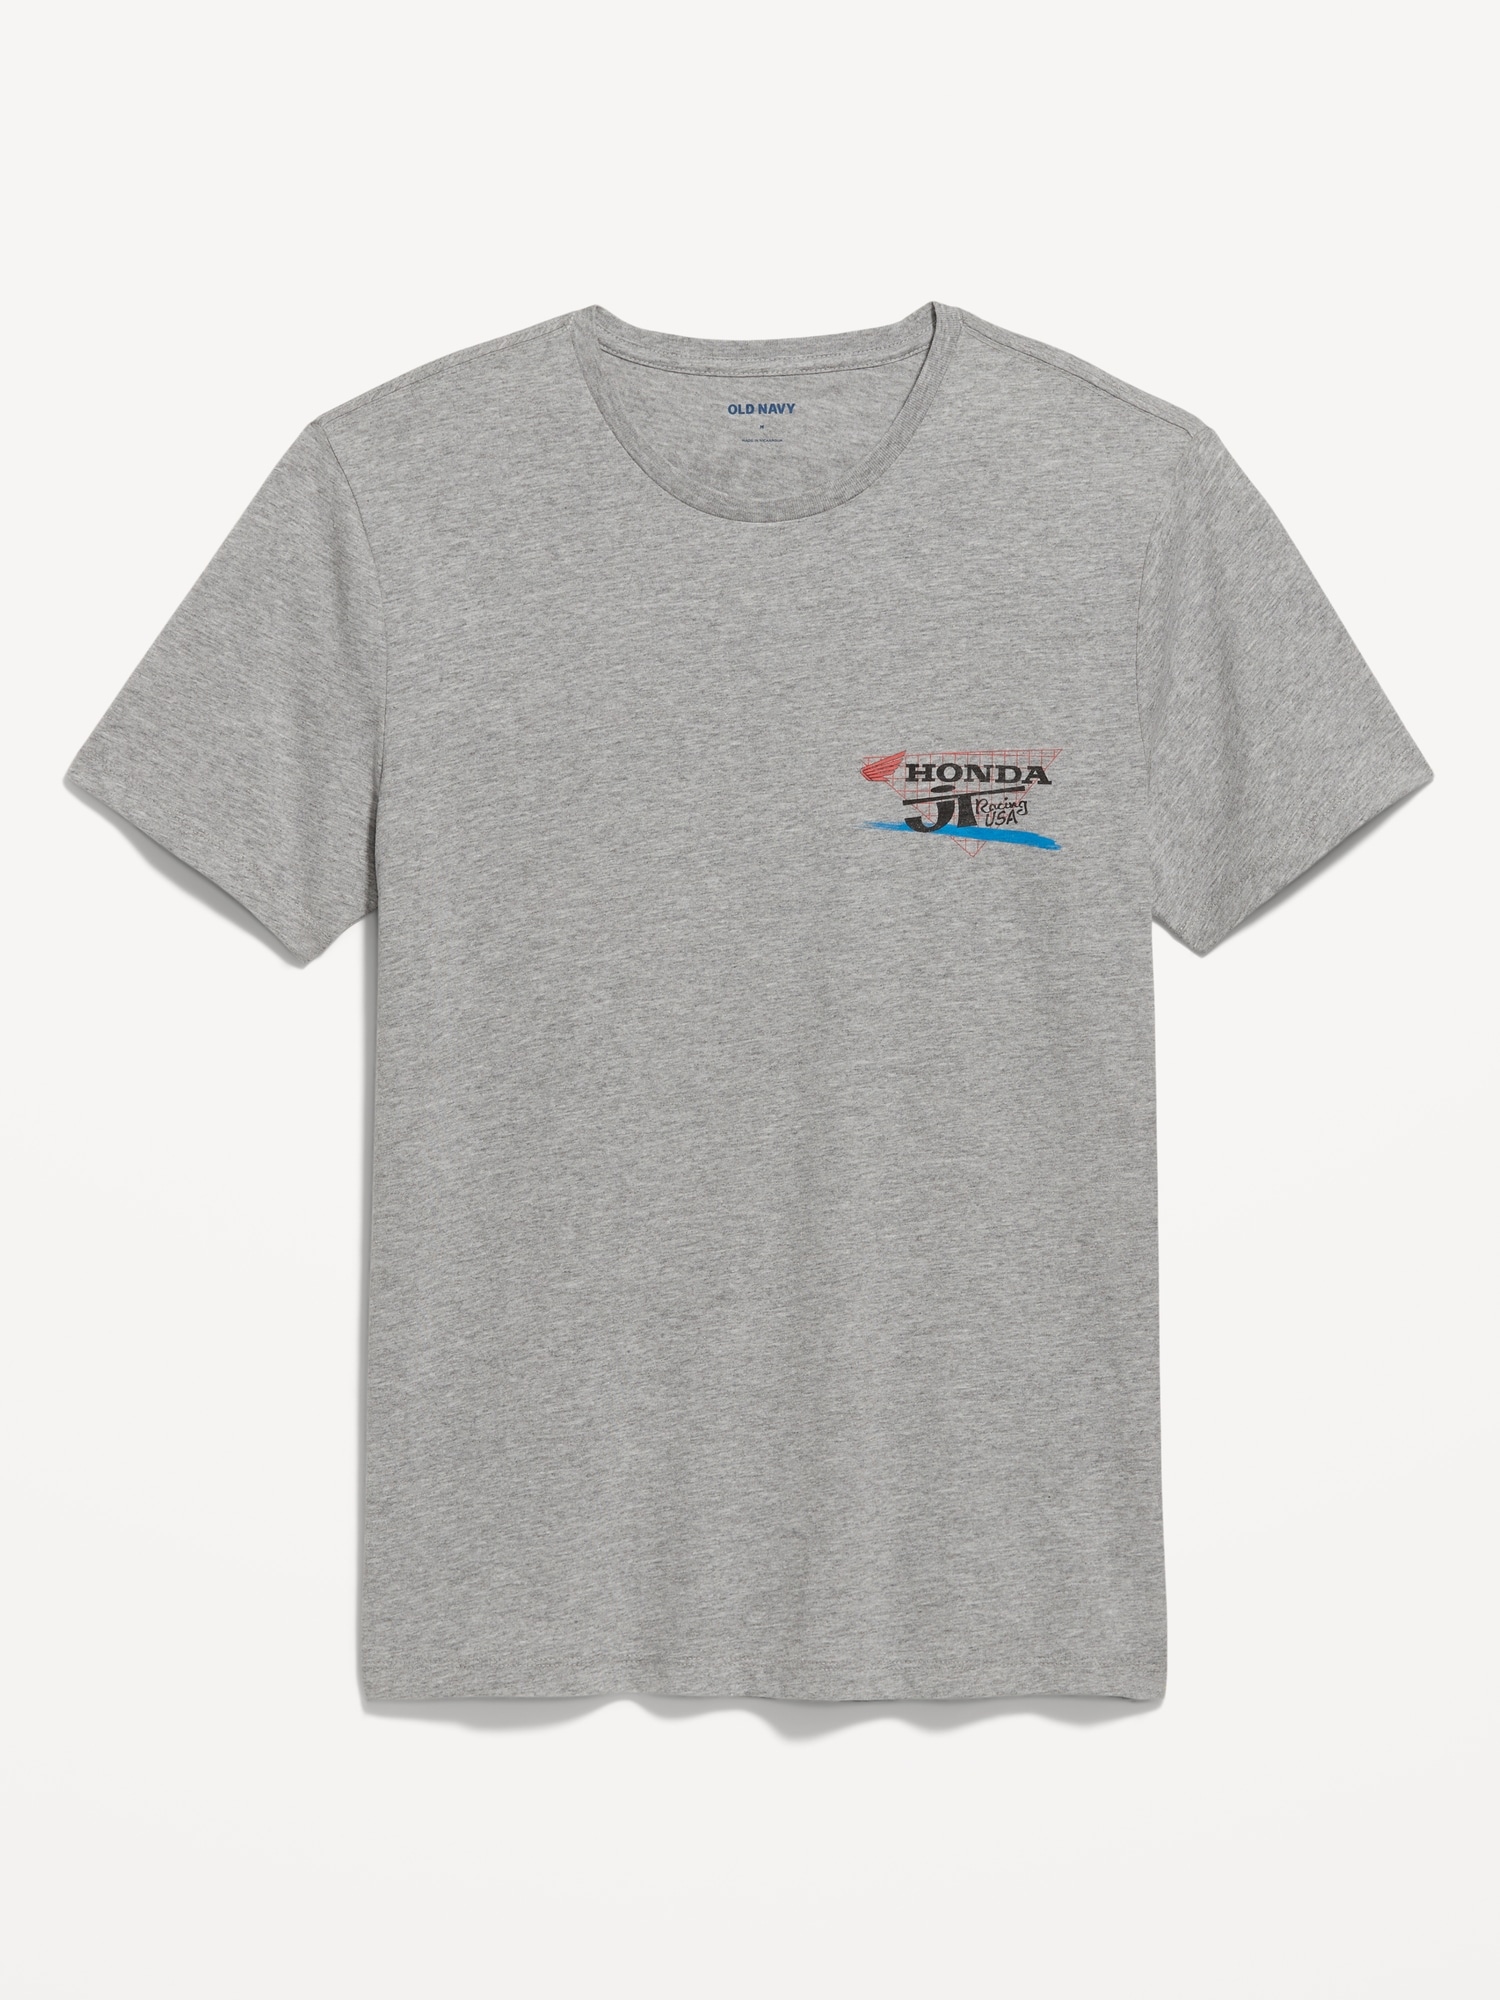 Honda© Gender-Neutral T-Shirt for Adults